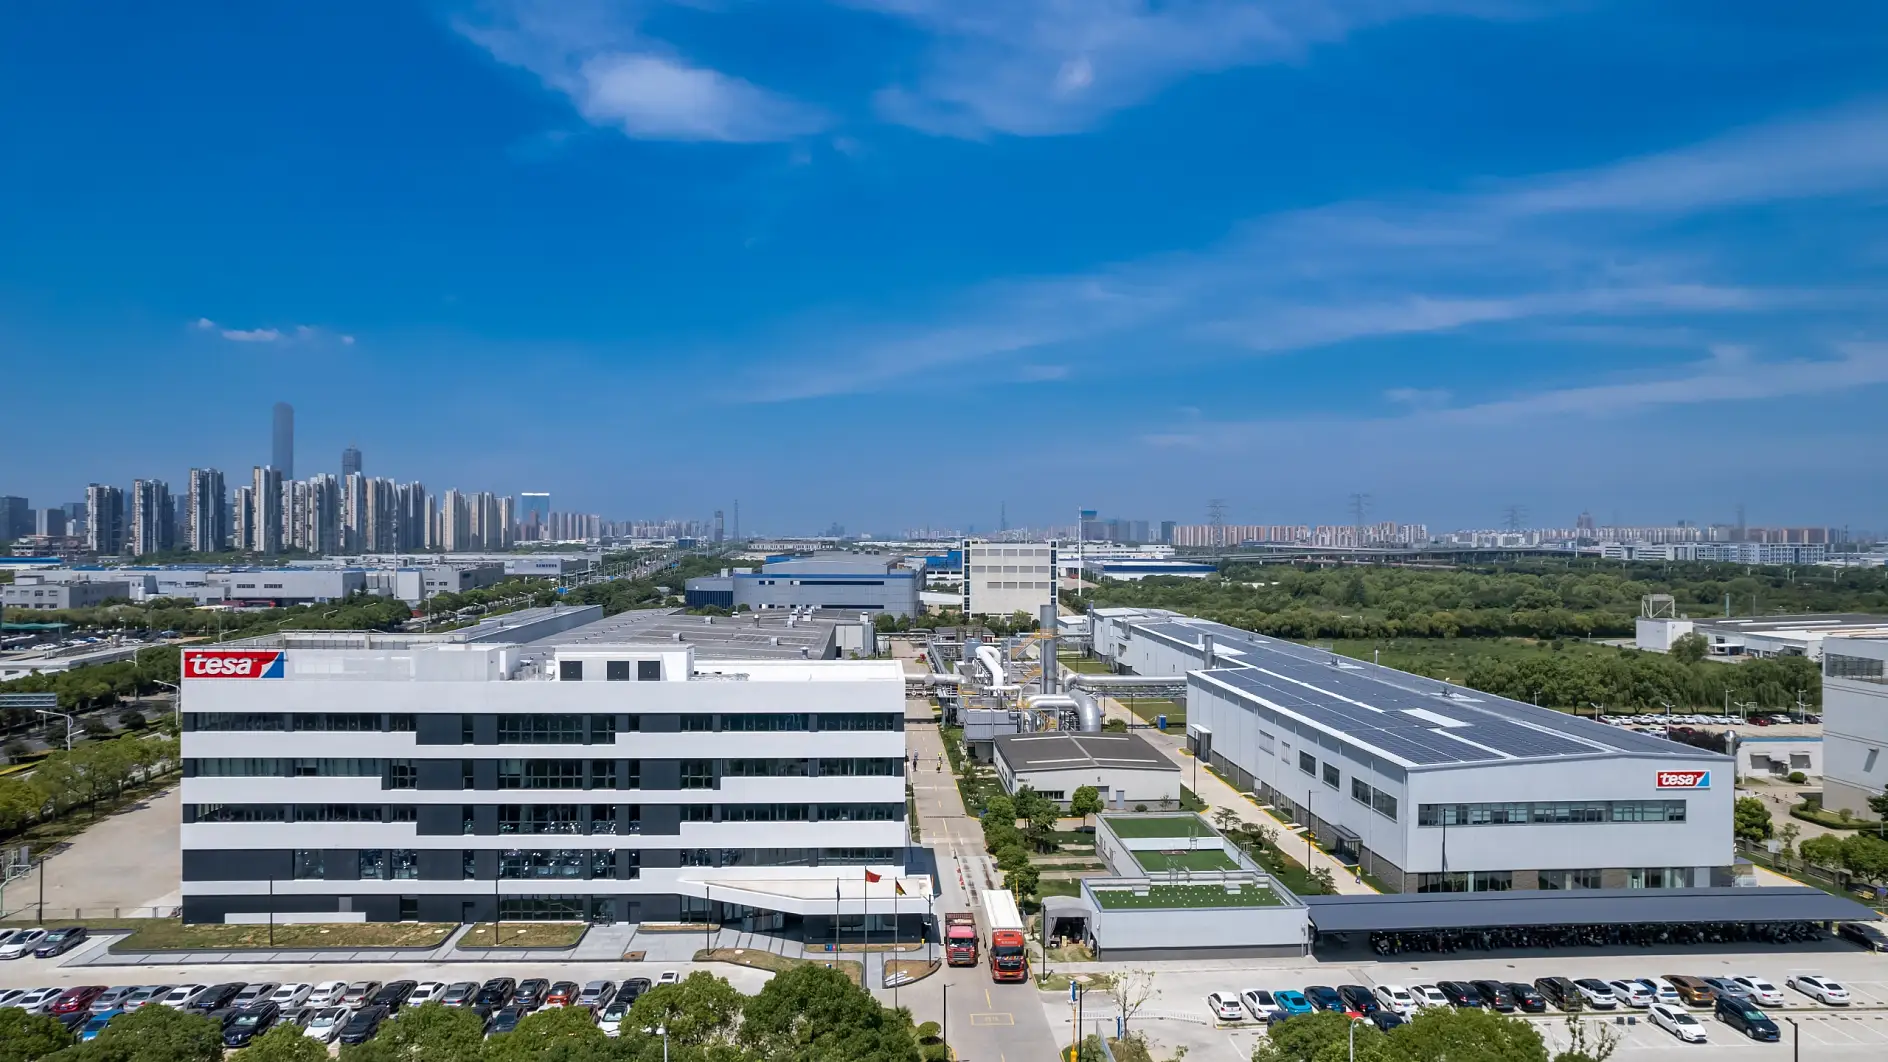 tesa Suzhou fabrikası